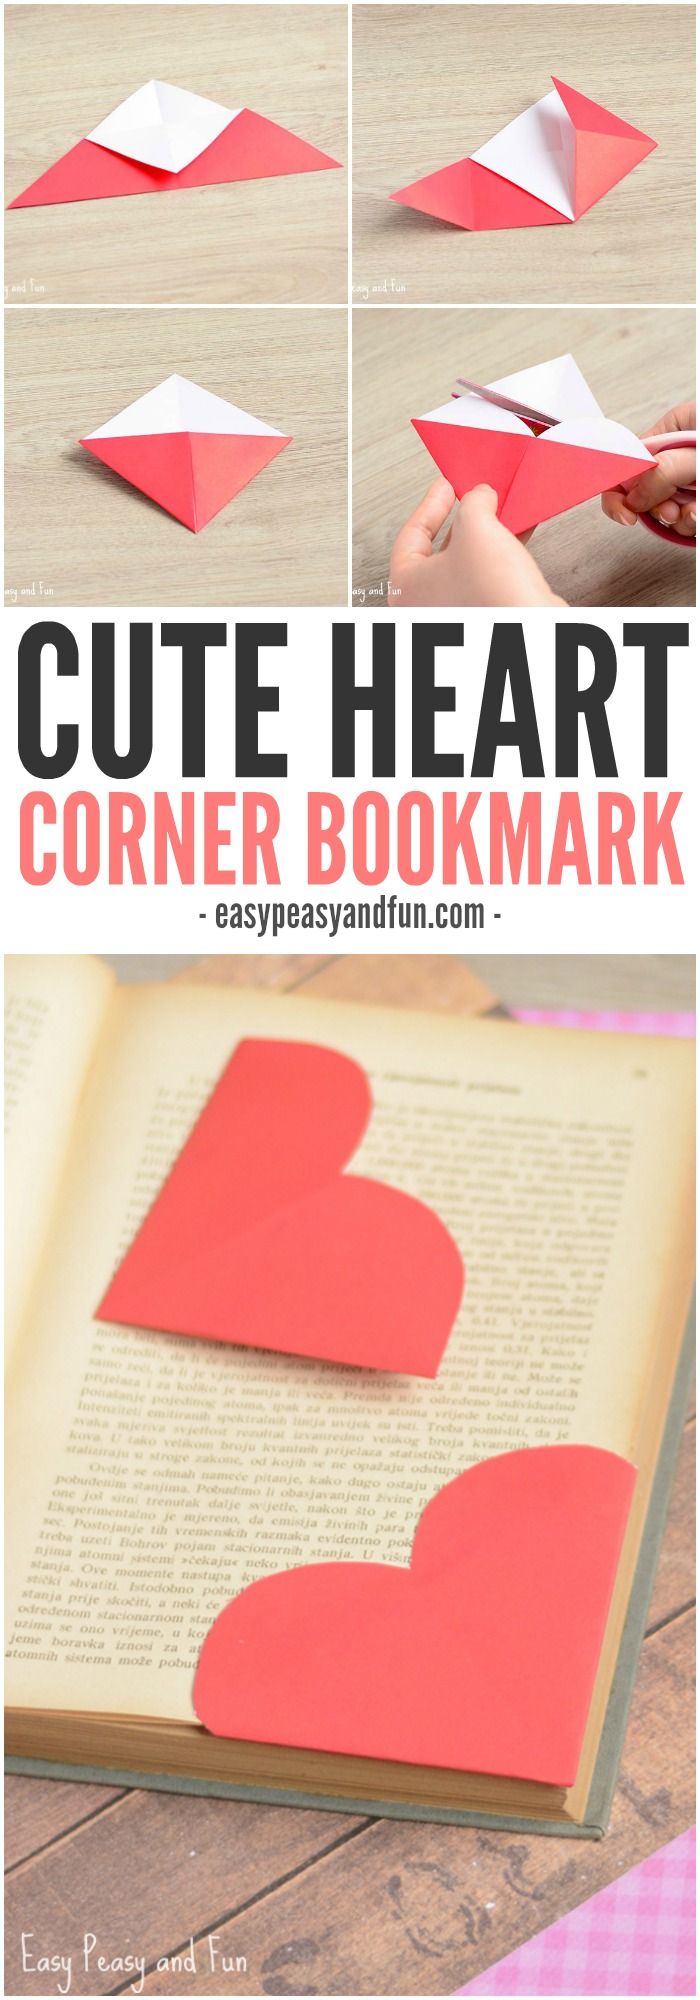 Heart Corner Bookmarks